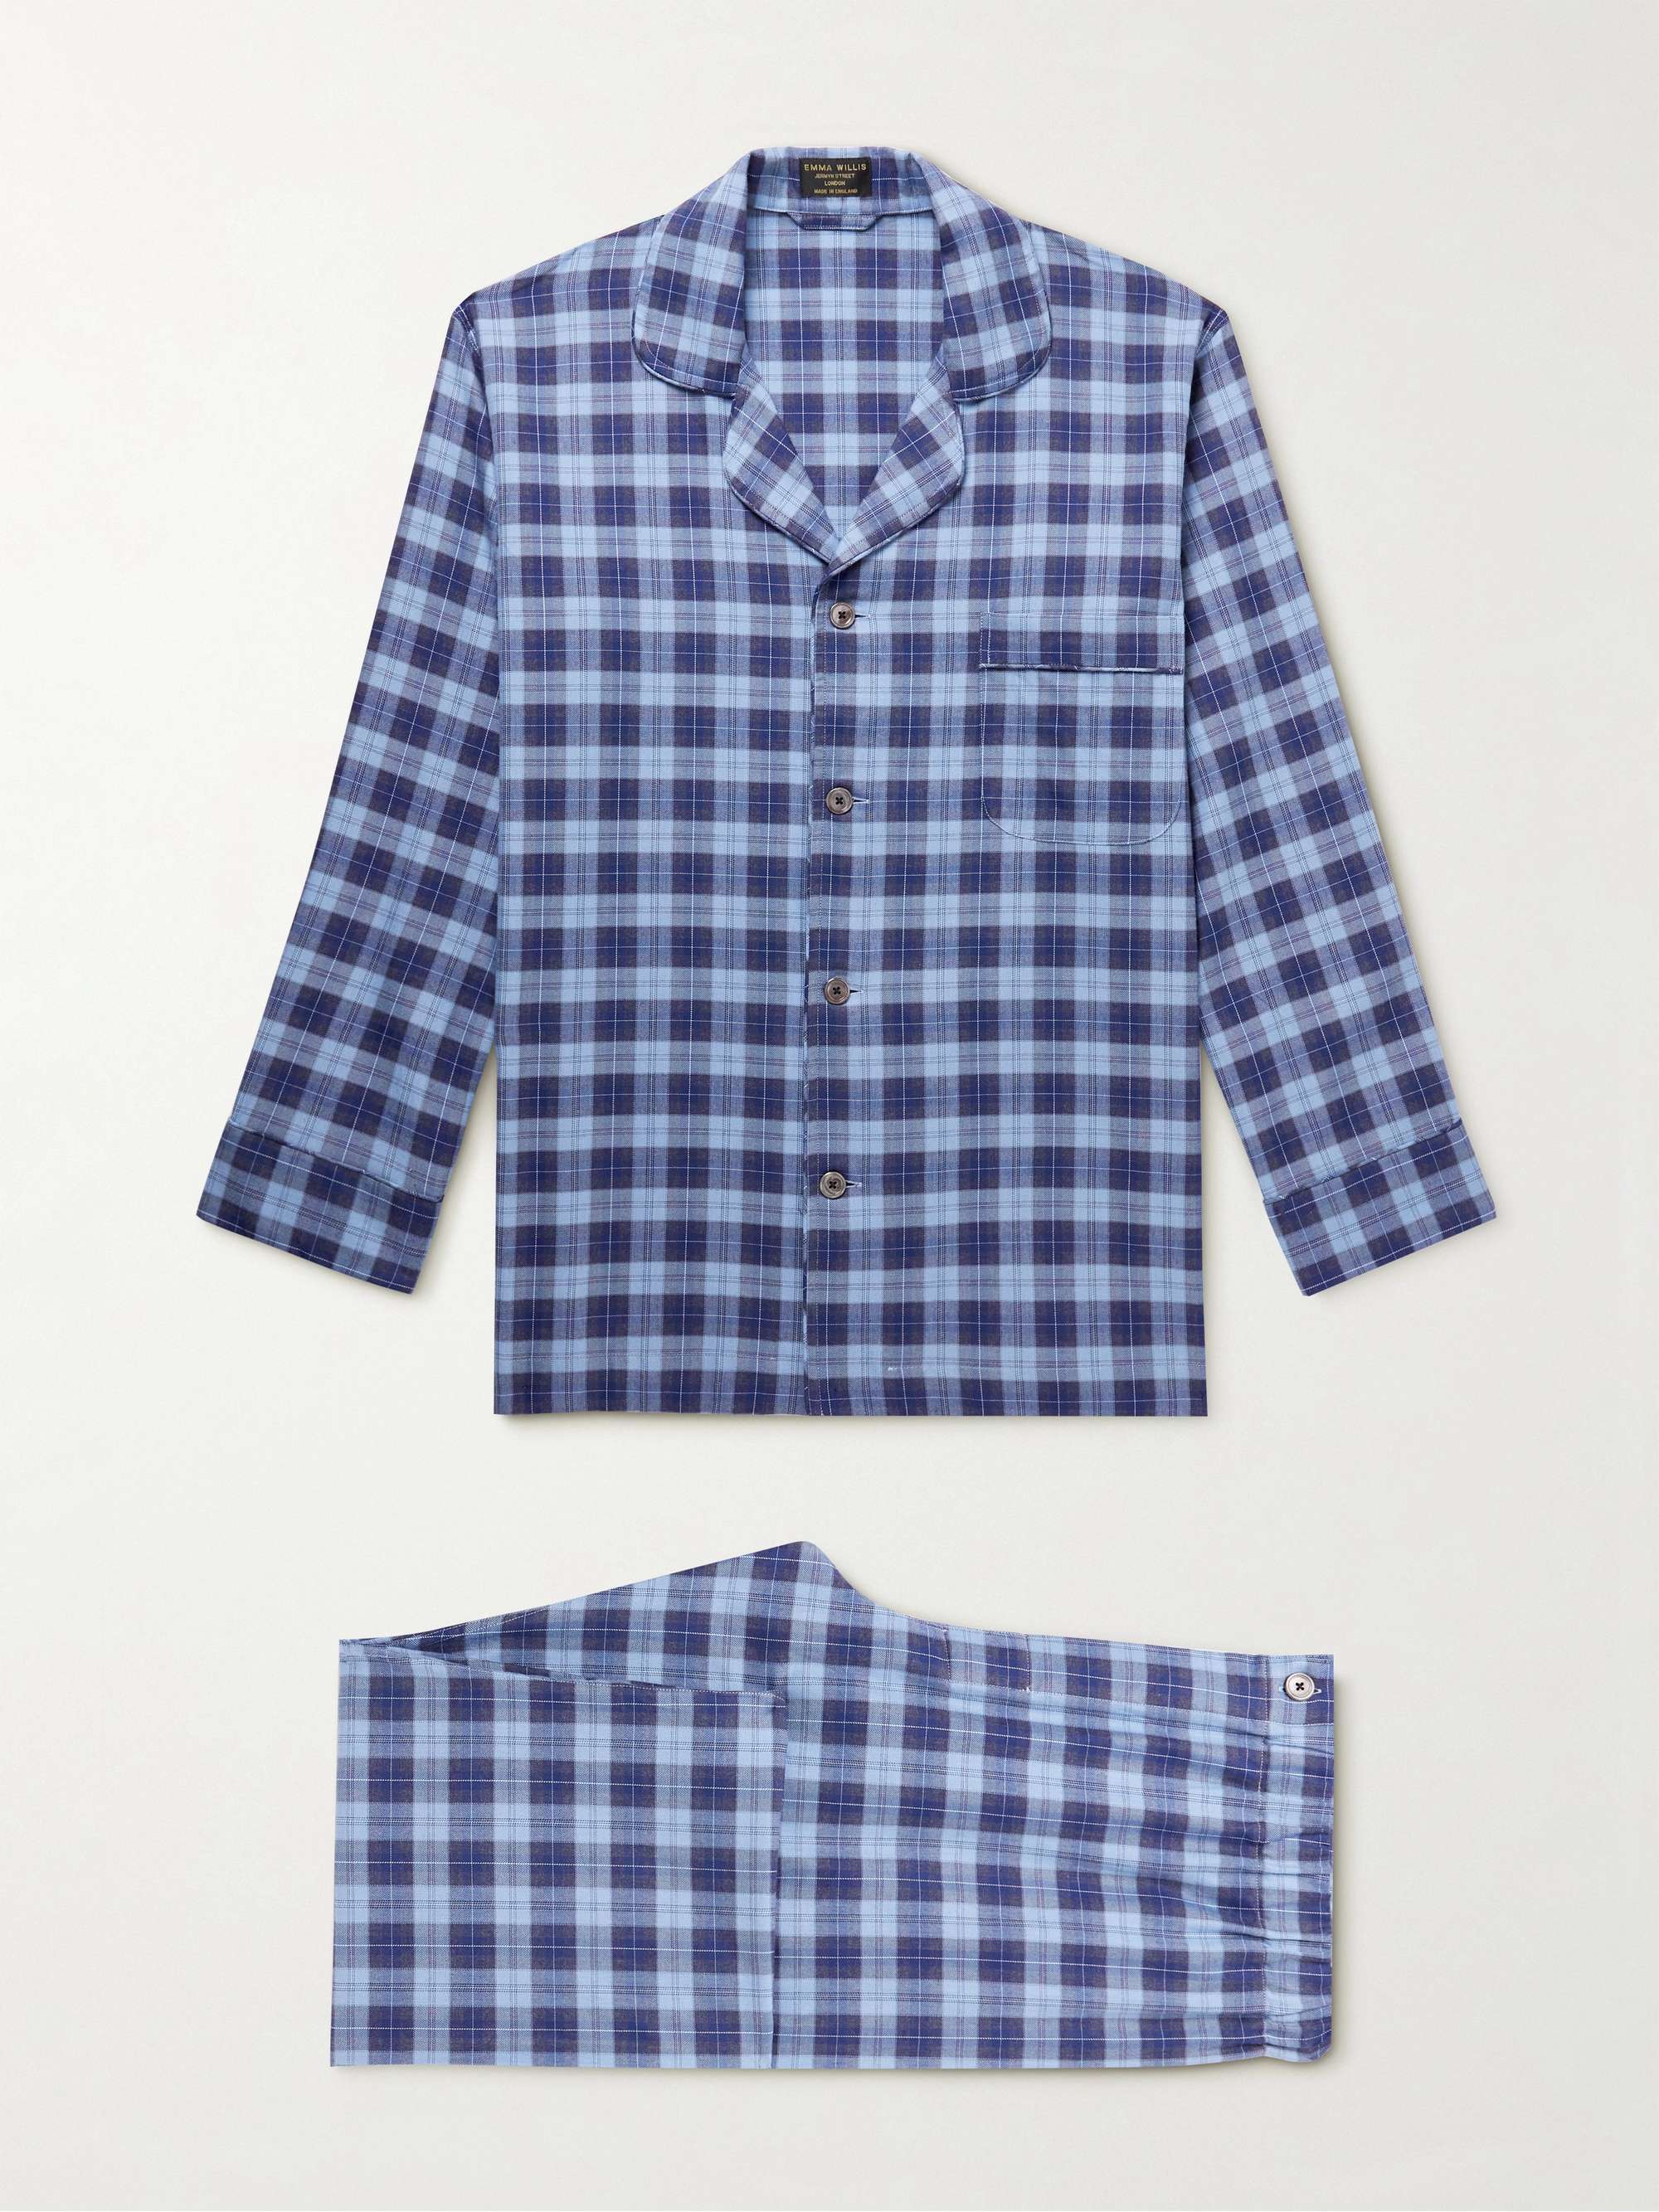 EMMA WILLIS Checked Cotton-Flannel Pyjama Set